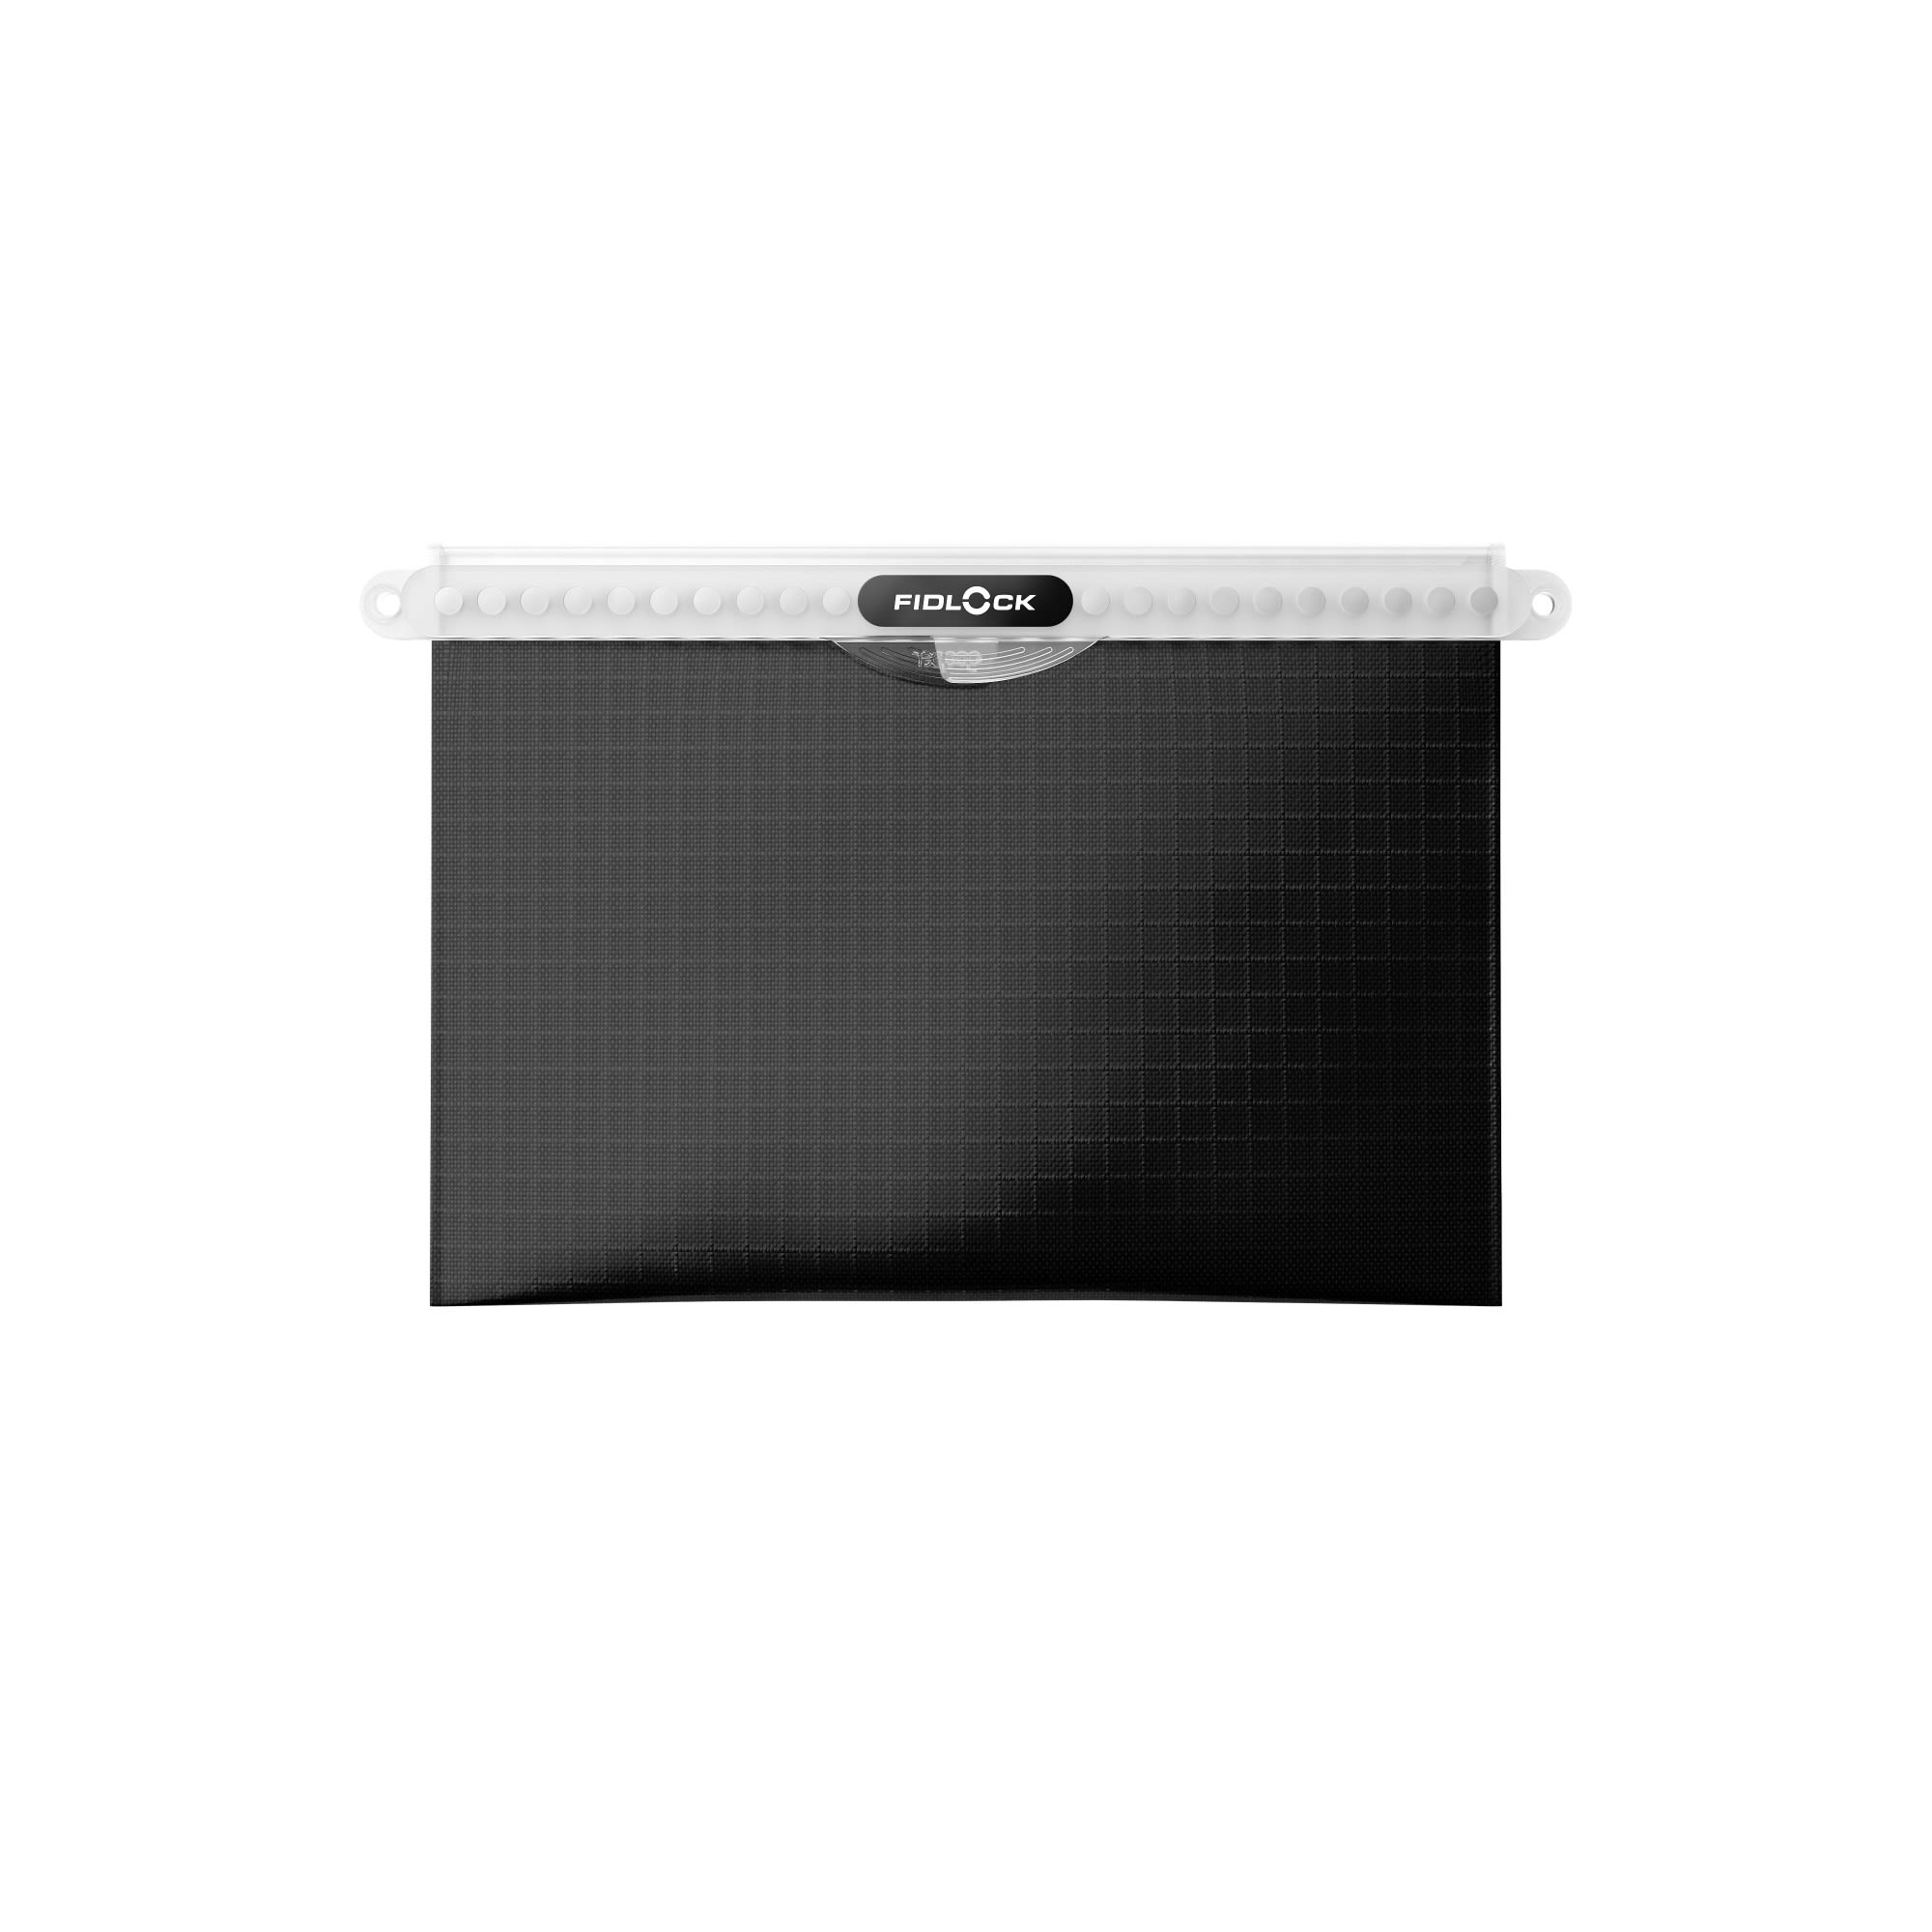 Fidlock Hermetic Drybag Multi Fabric Schwarz- Drybags- Grsse One Size - Farbe Transparent - Black Fabric - Black Fabric